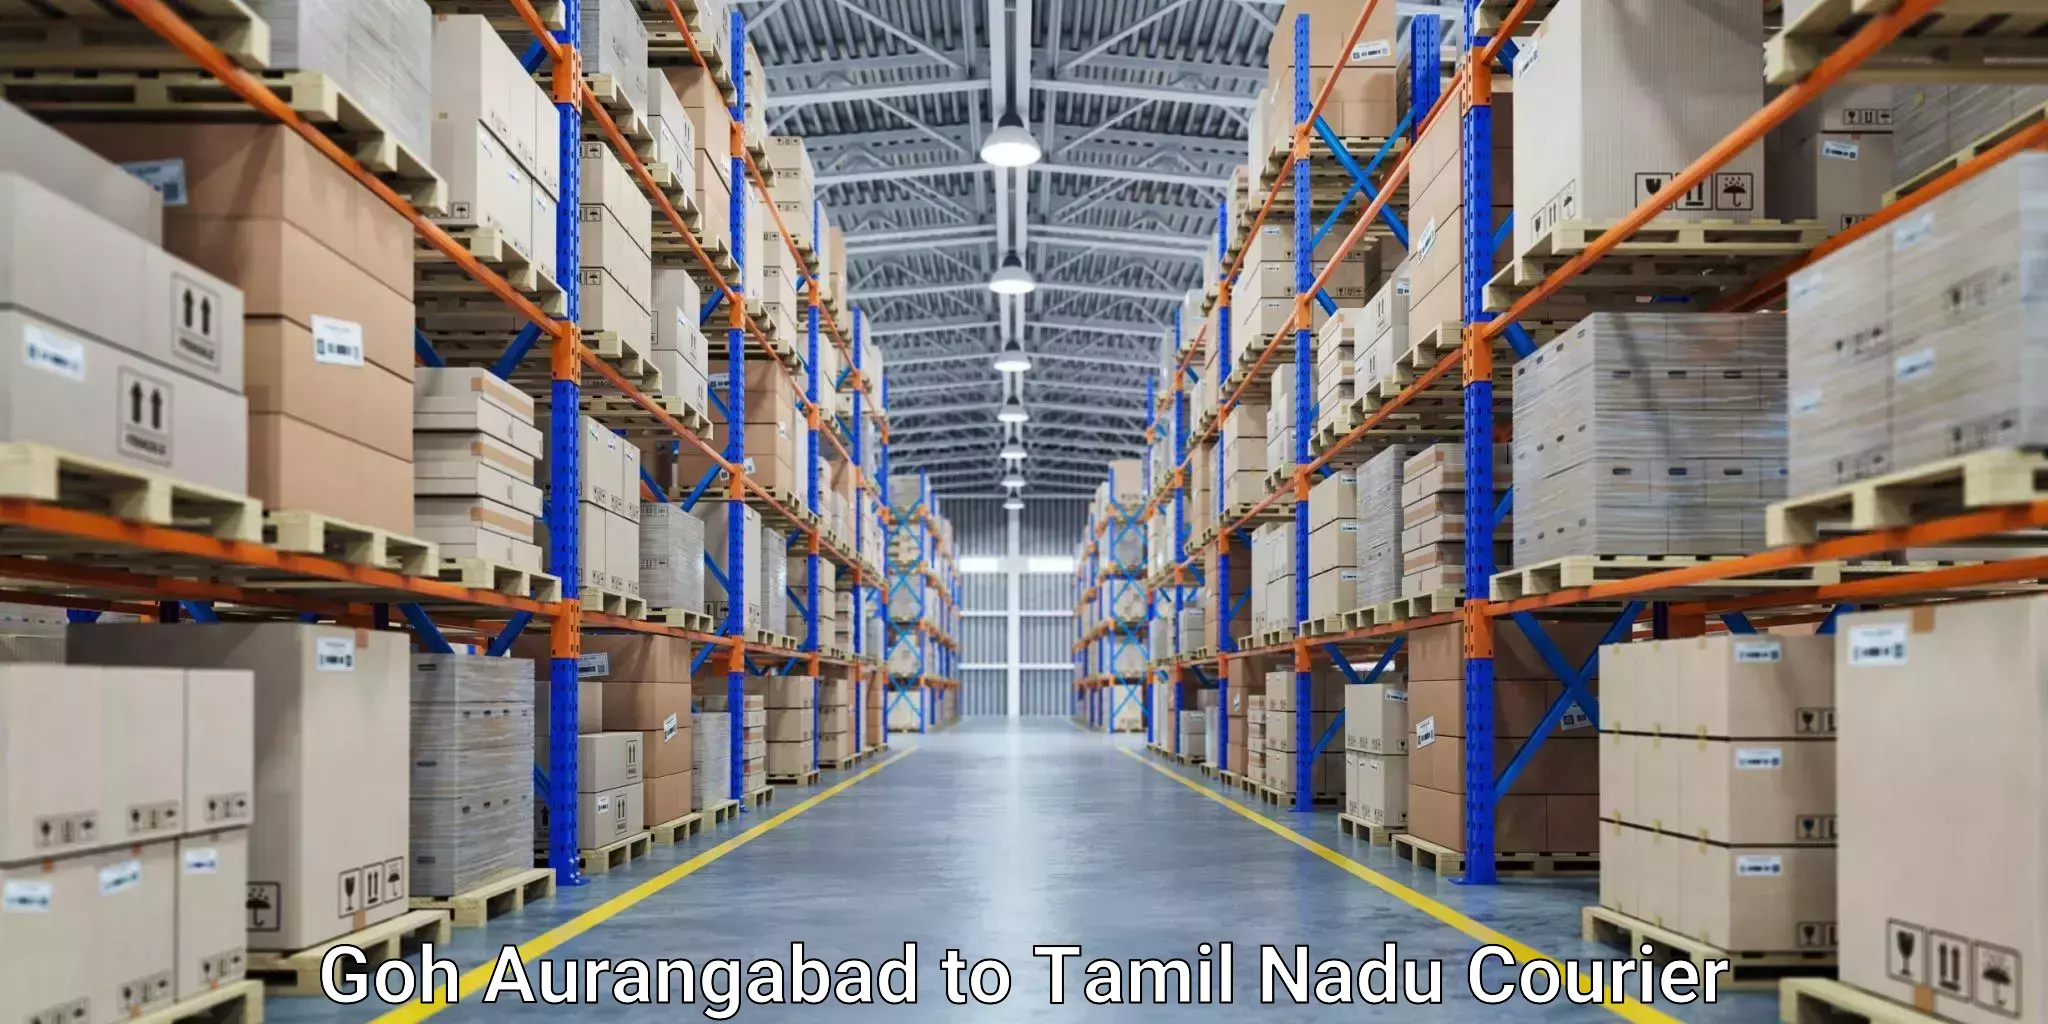 Advanced delivery network Goh Aurangabad to Tiruchengodu